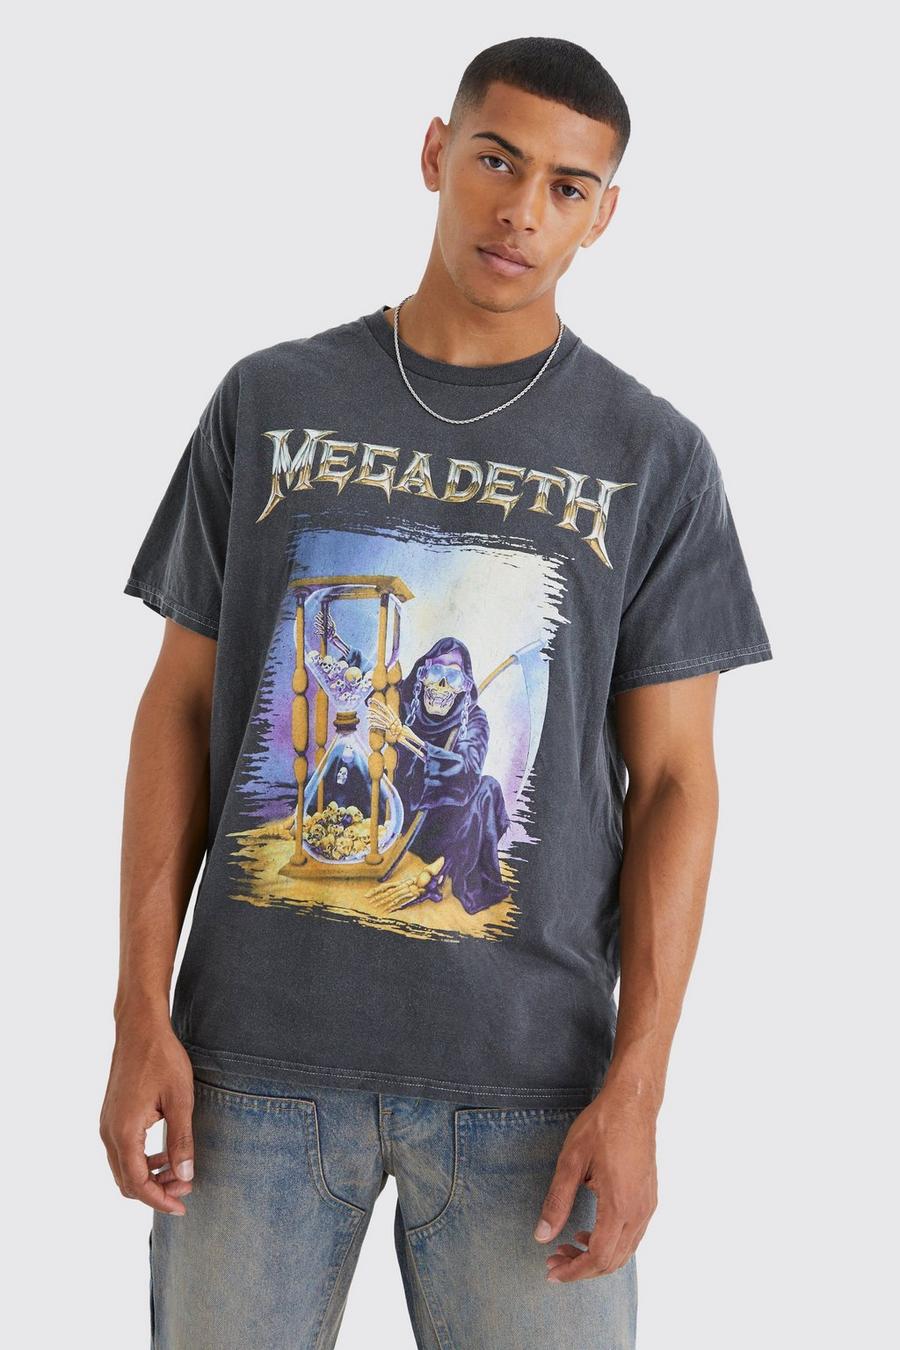 Charcoal gris Oversized Megadeth Overdye License T-shirt